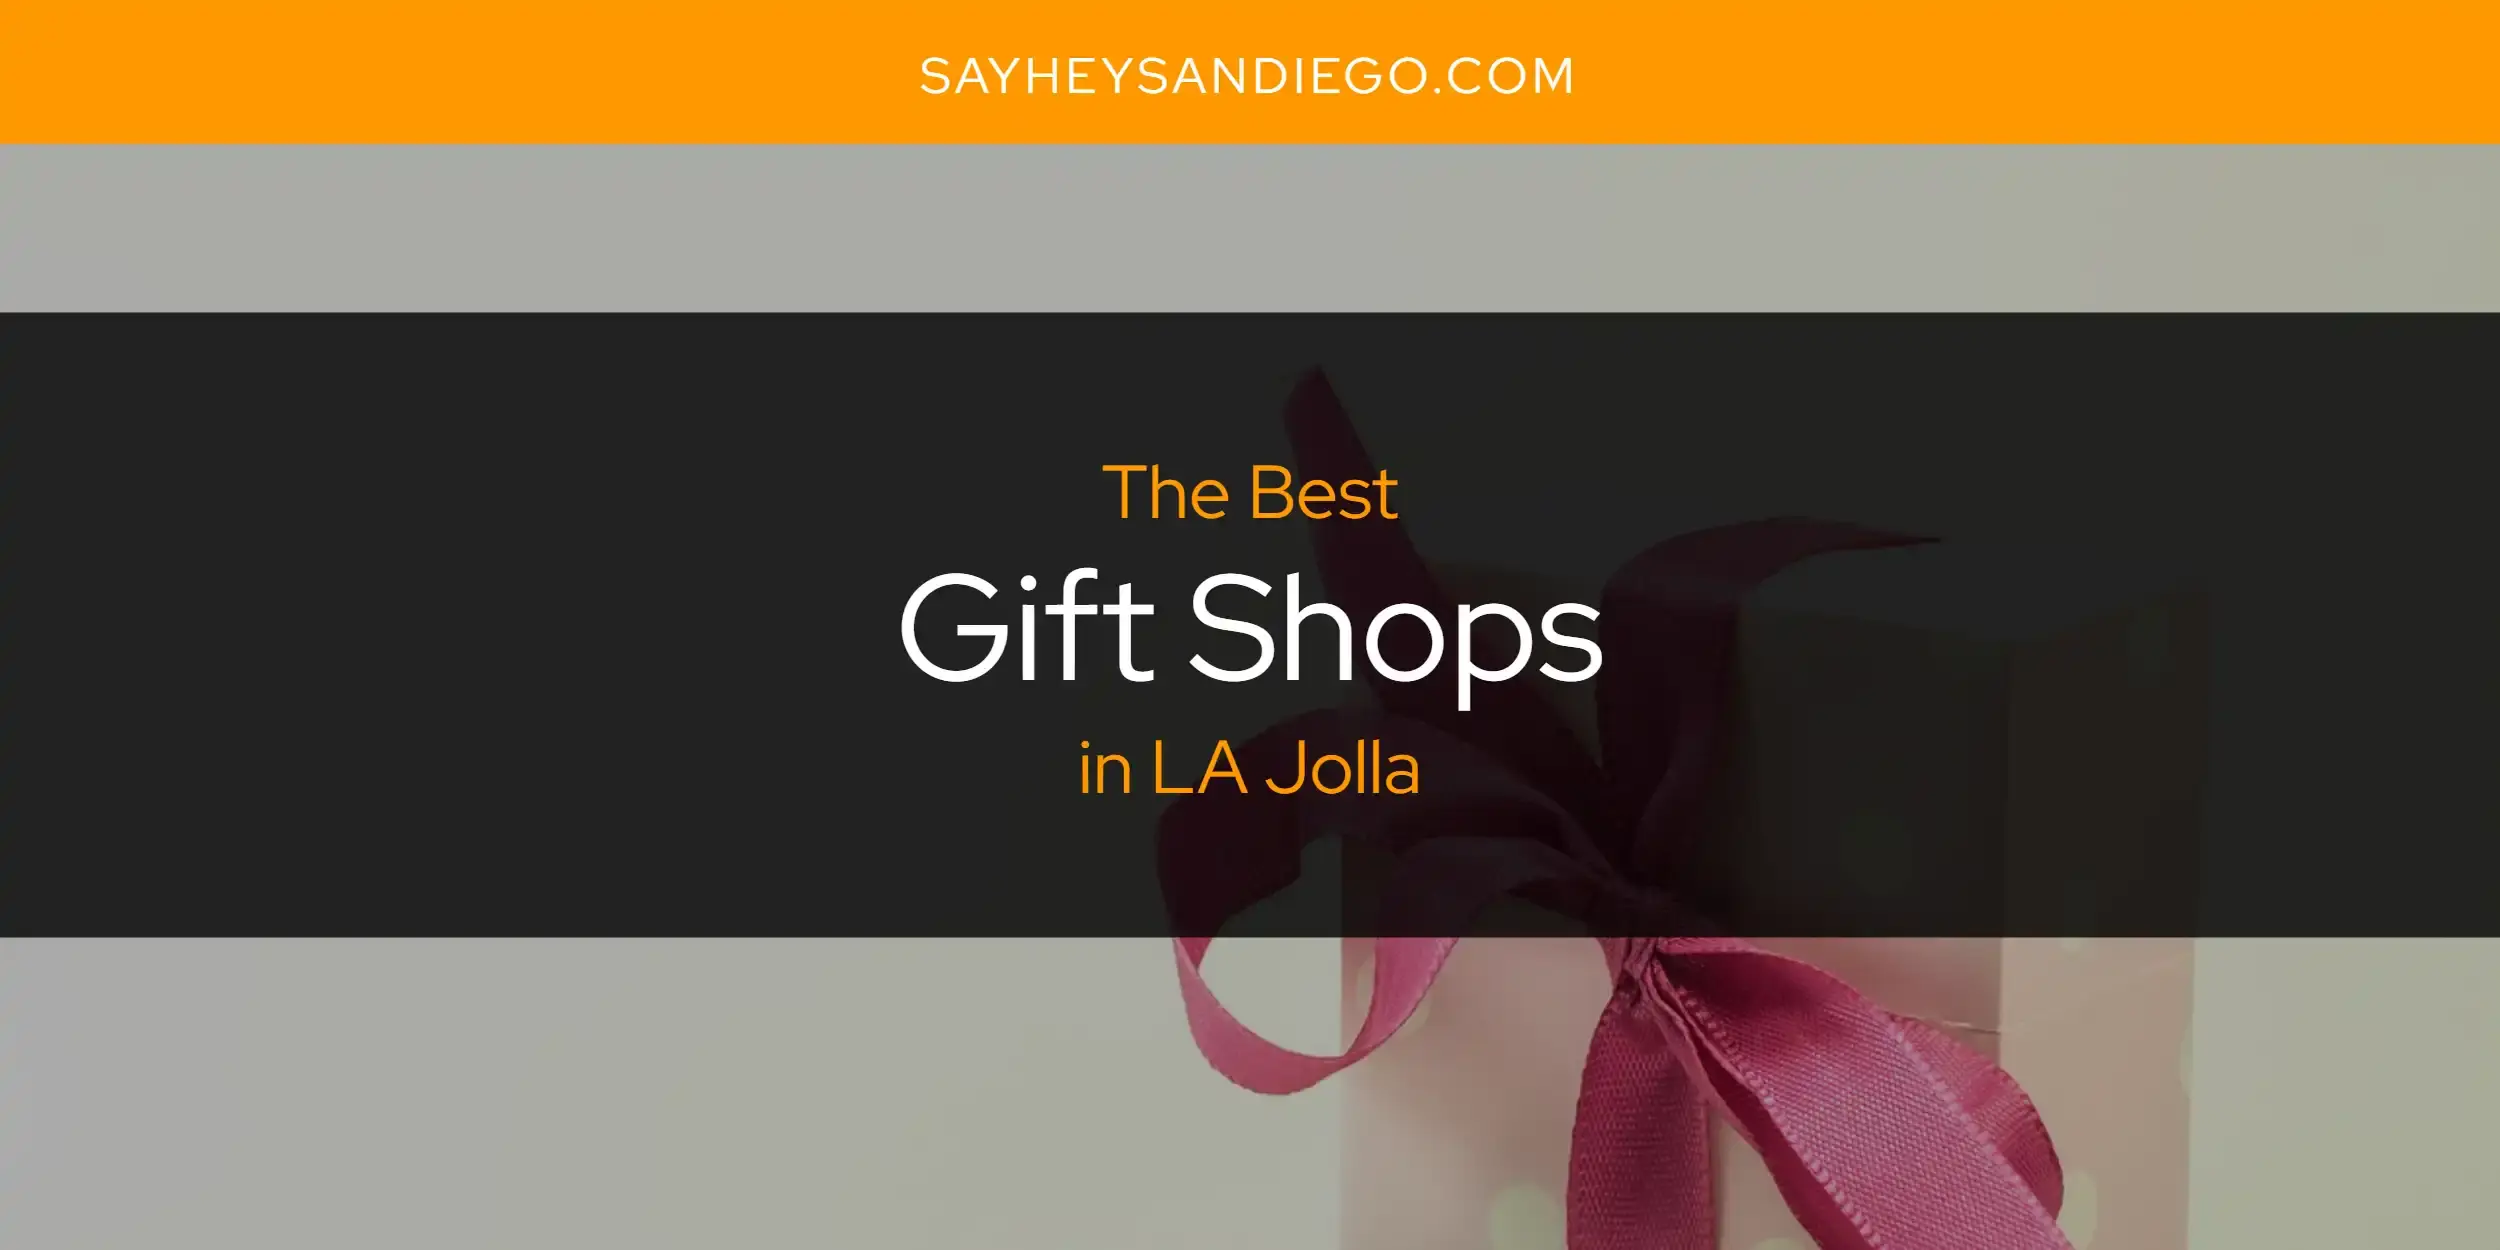 Best Gift Shops in LA Jolla? Here's the Top 13